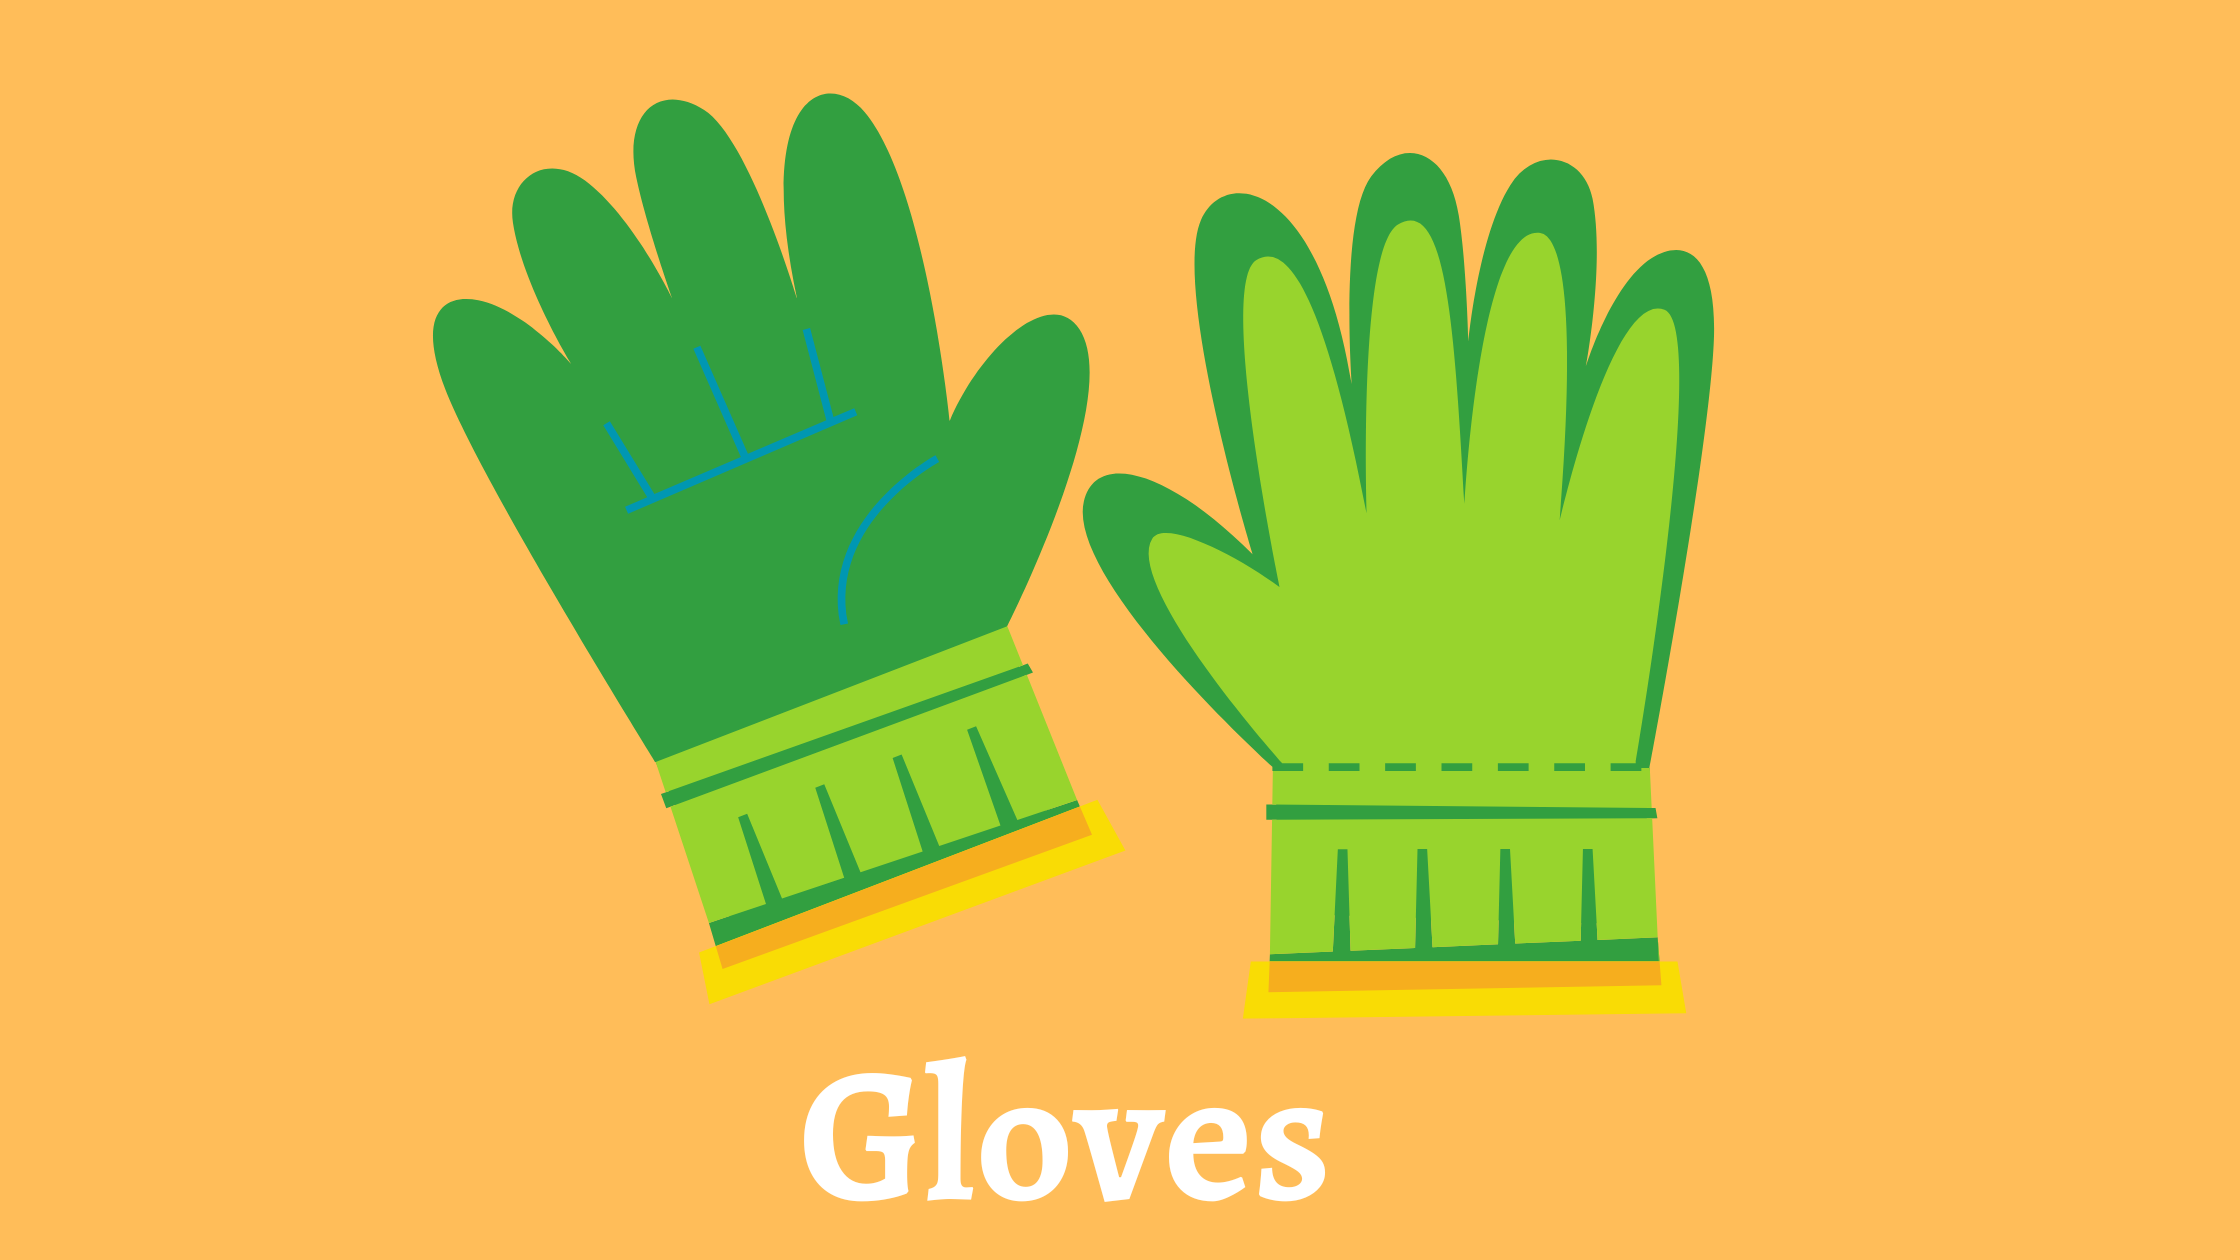 Should I Use Powder-Free Gloves